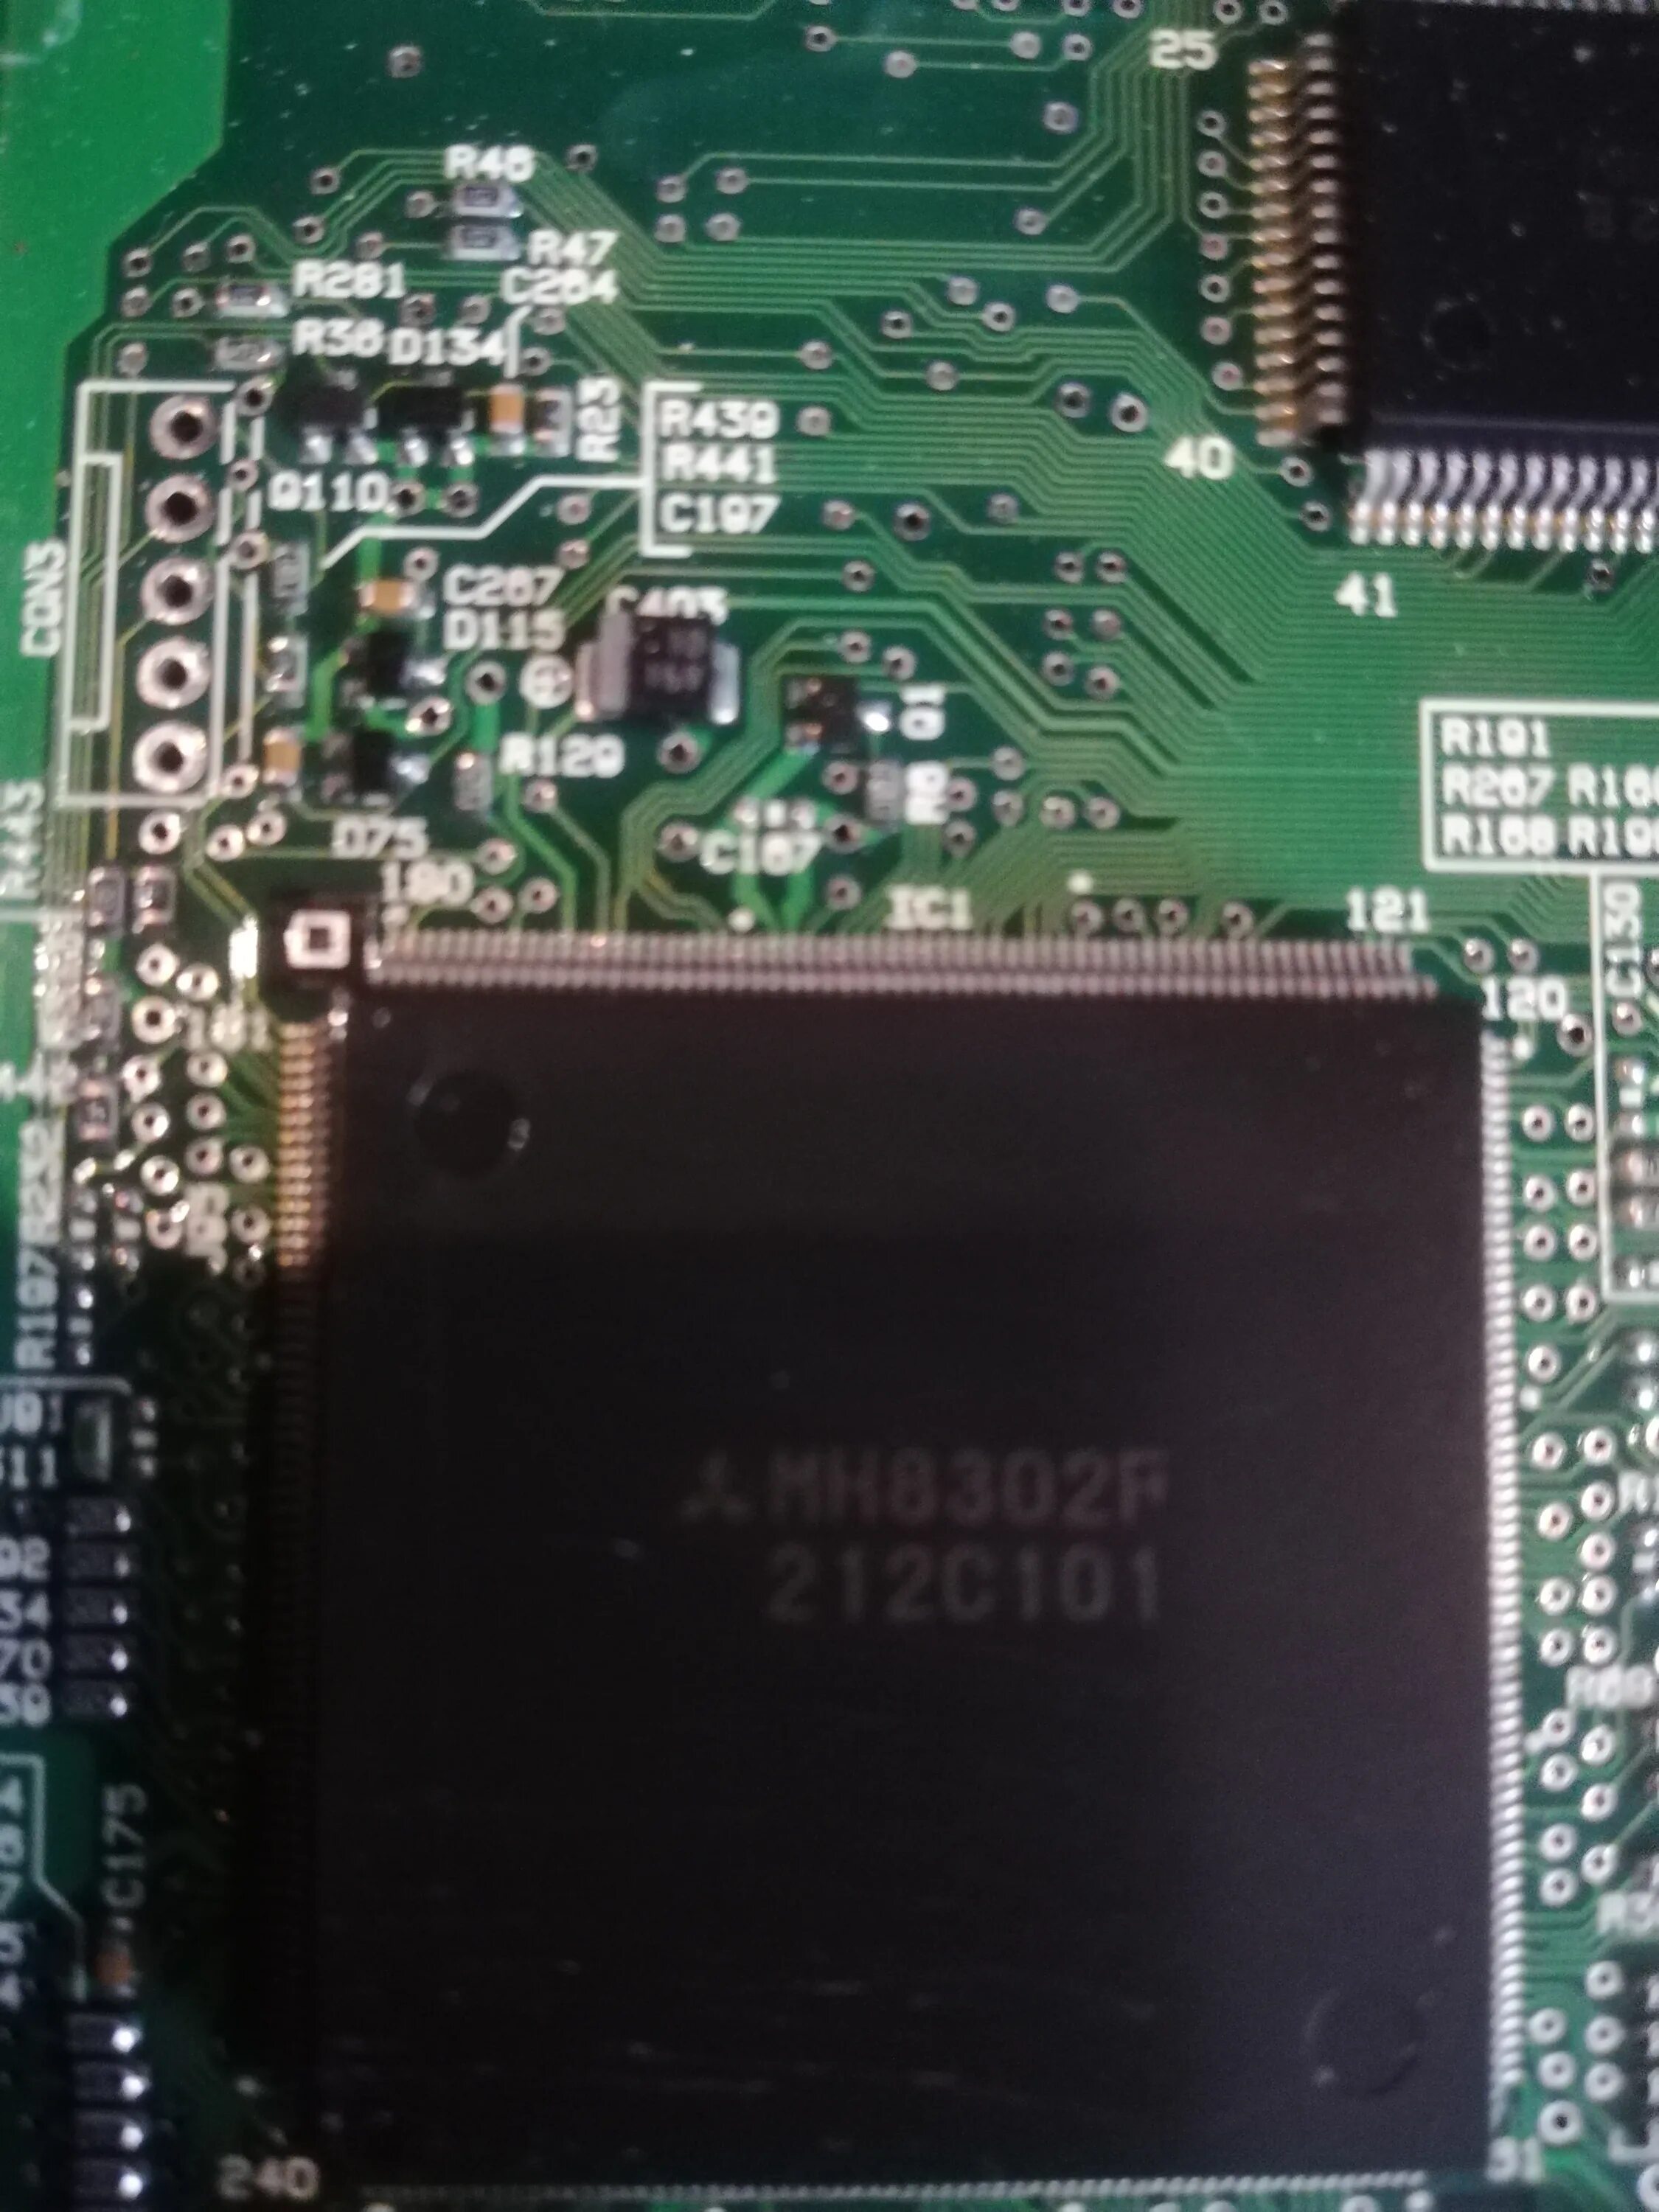 Hello процессор. Mh8302 ЭБУ. Проц mh8305f. Mh8302f KTAG протокол. Прошивка mh8302f.